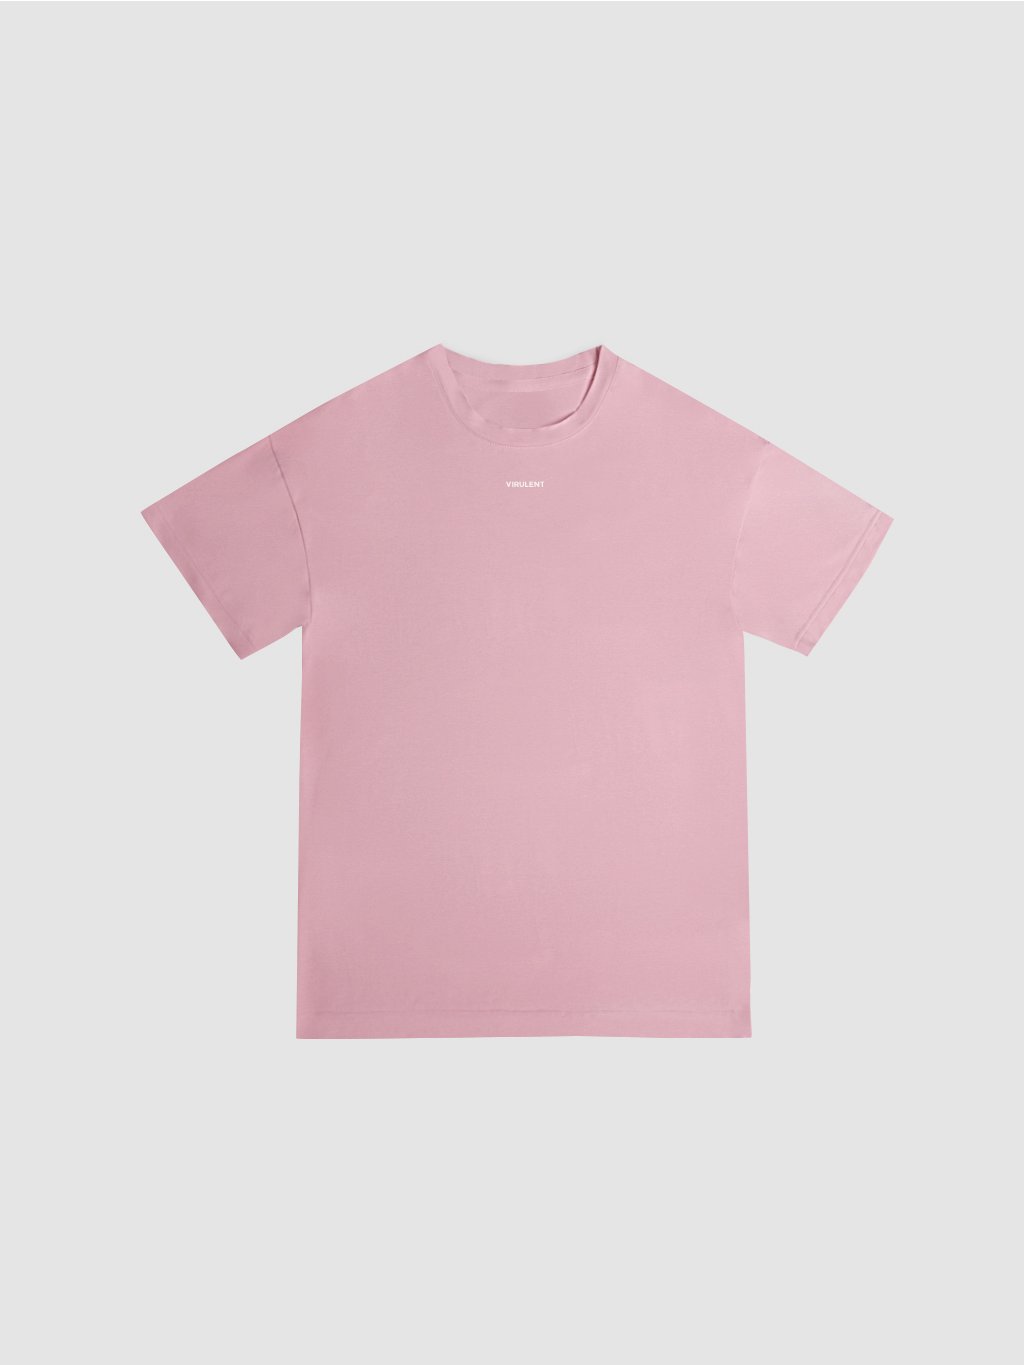 Flamingo tričko produkt kopie